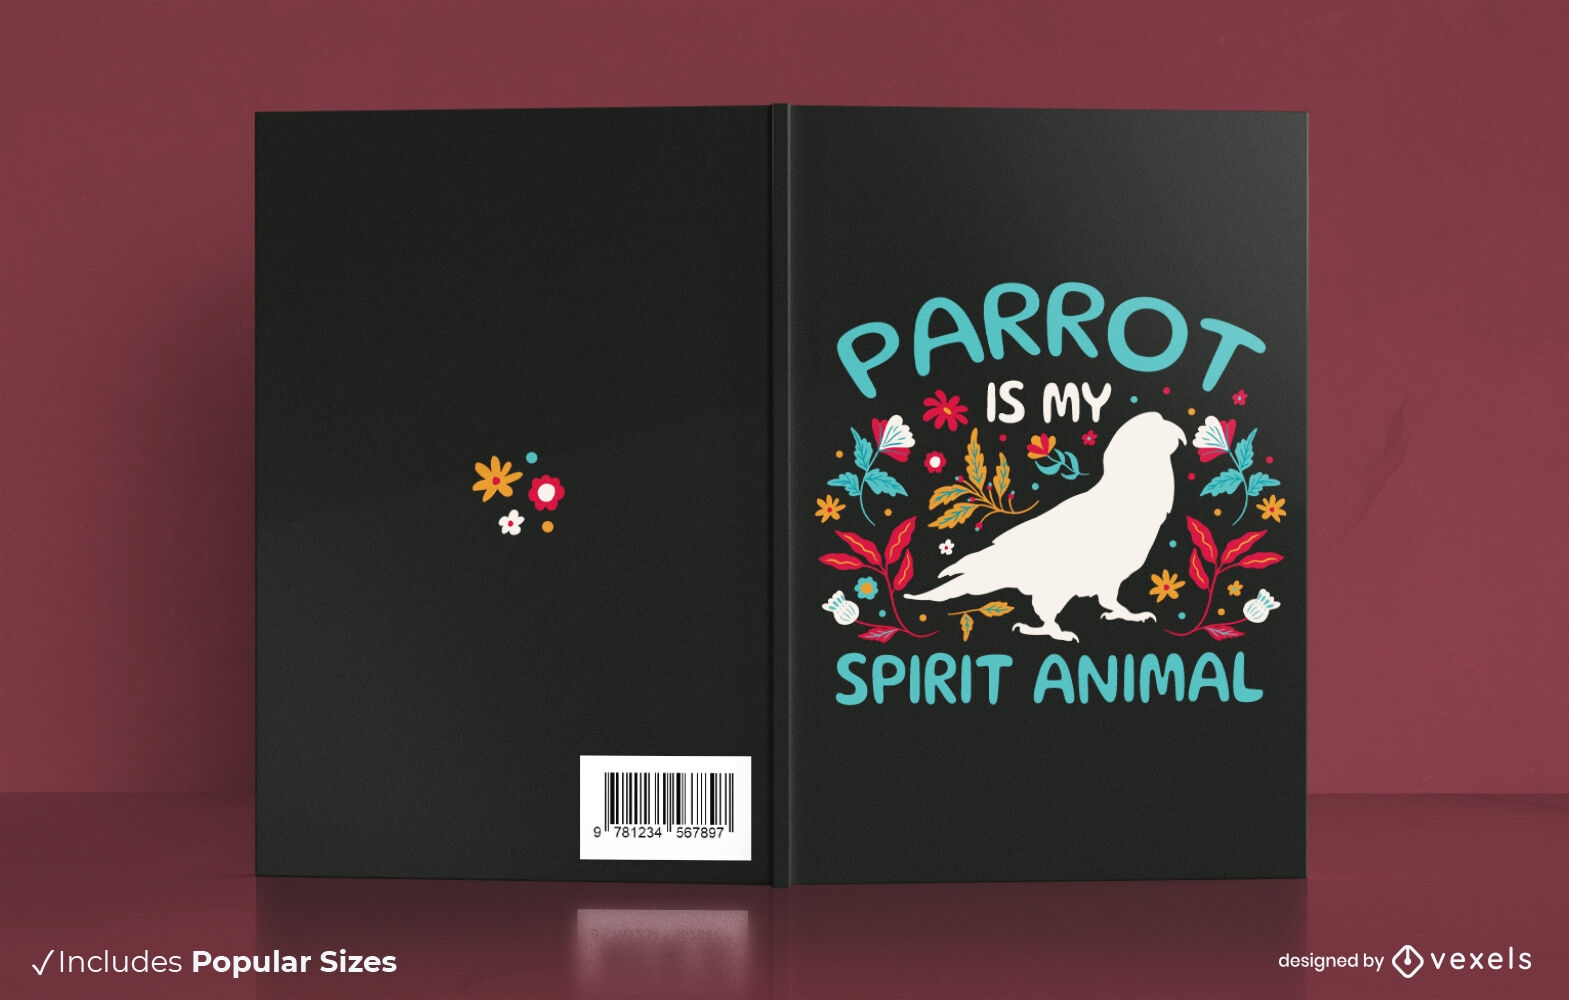 Parrot spirit animal book cover design